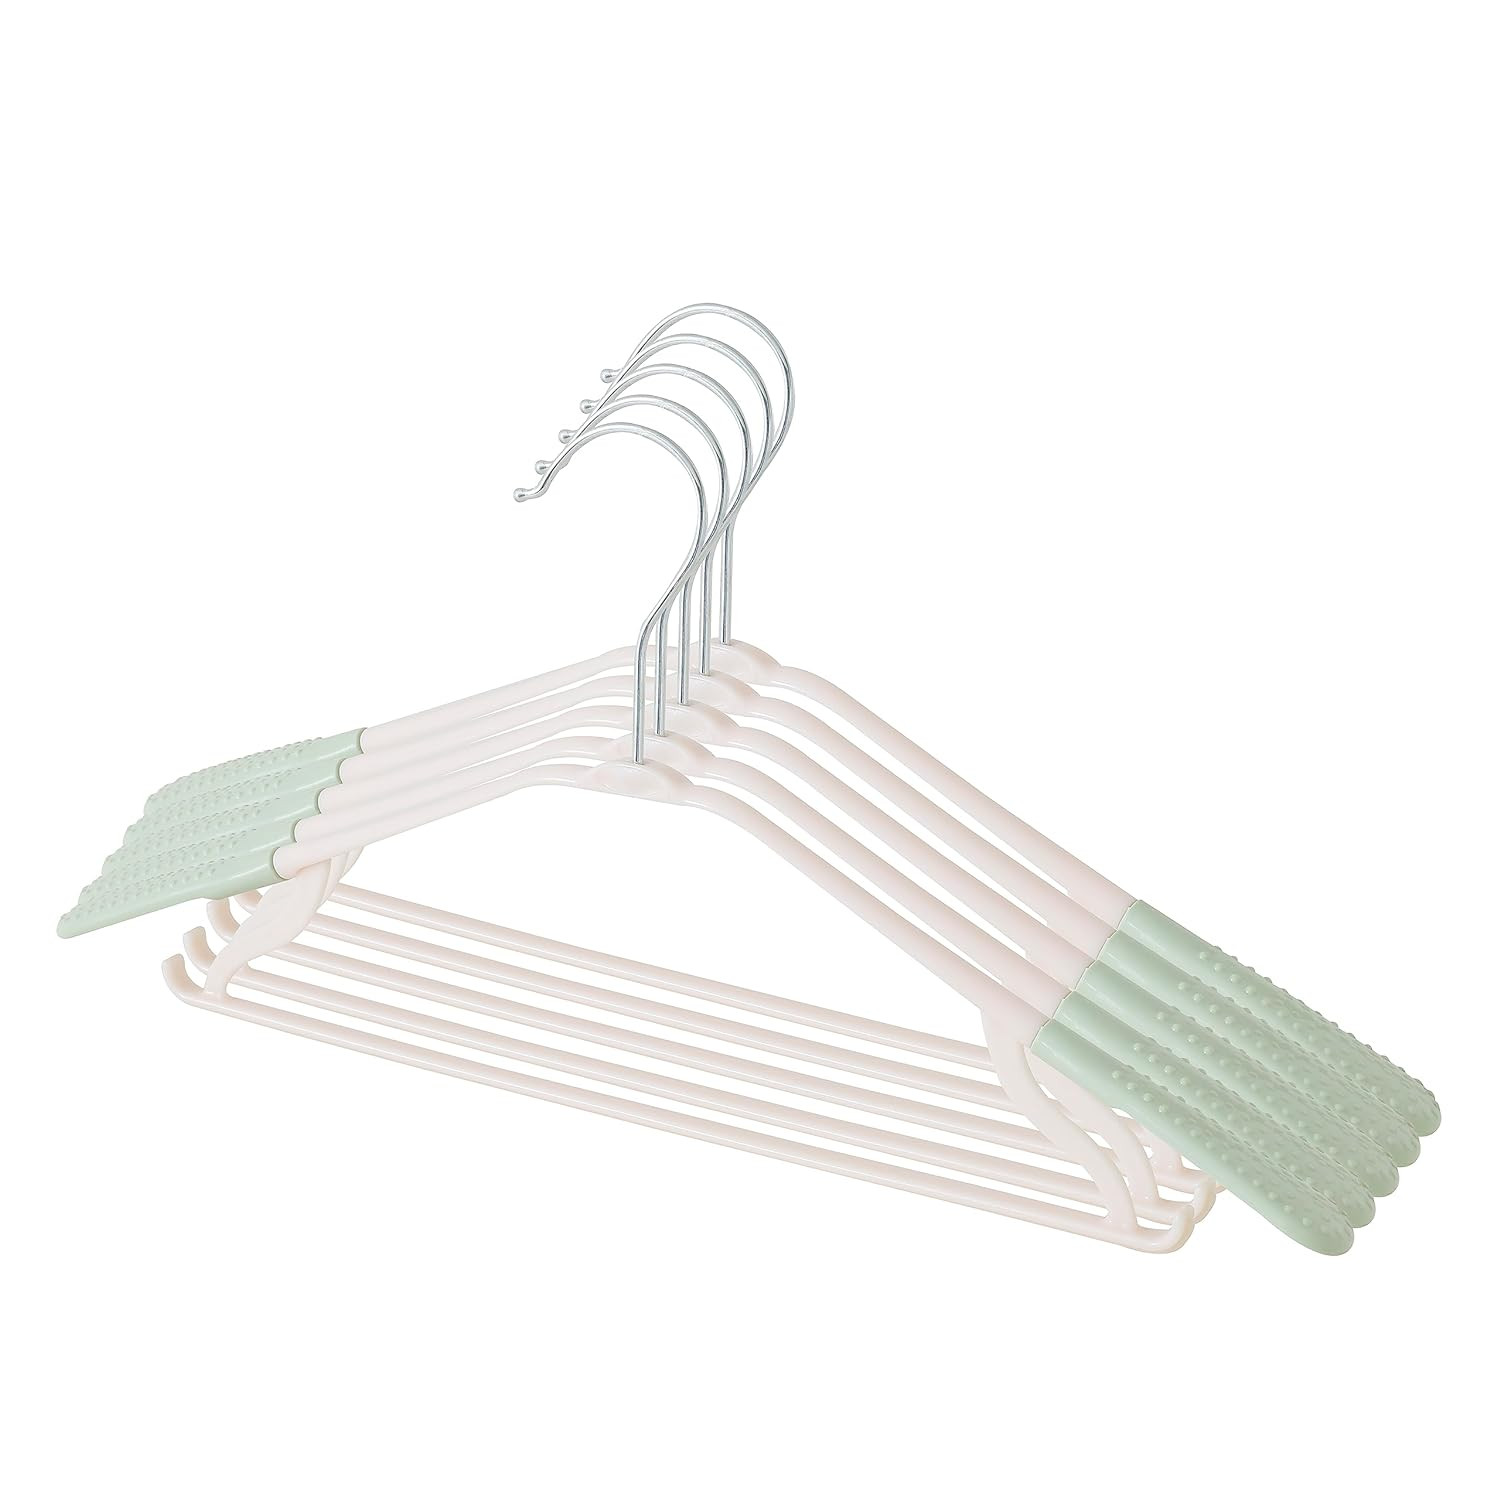 Kuber IndustriesPP Cloth Hanger Set of 5 With Zinc Plated Steel Hook (Green)